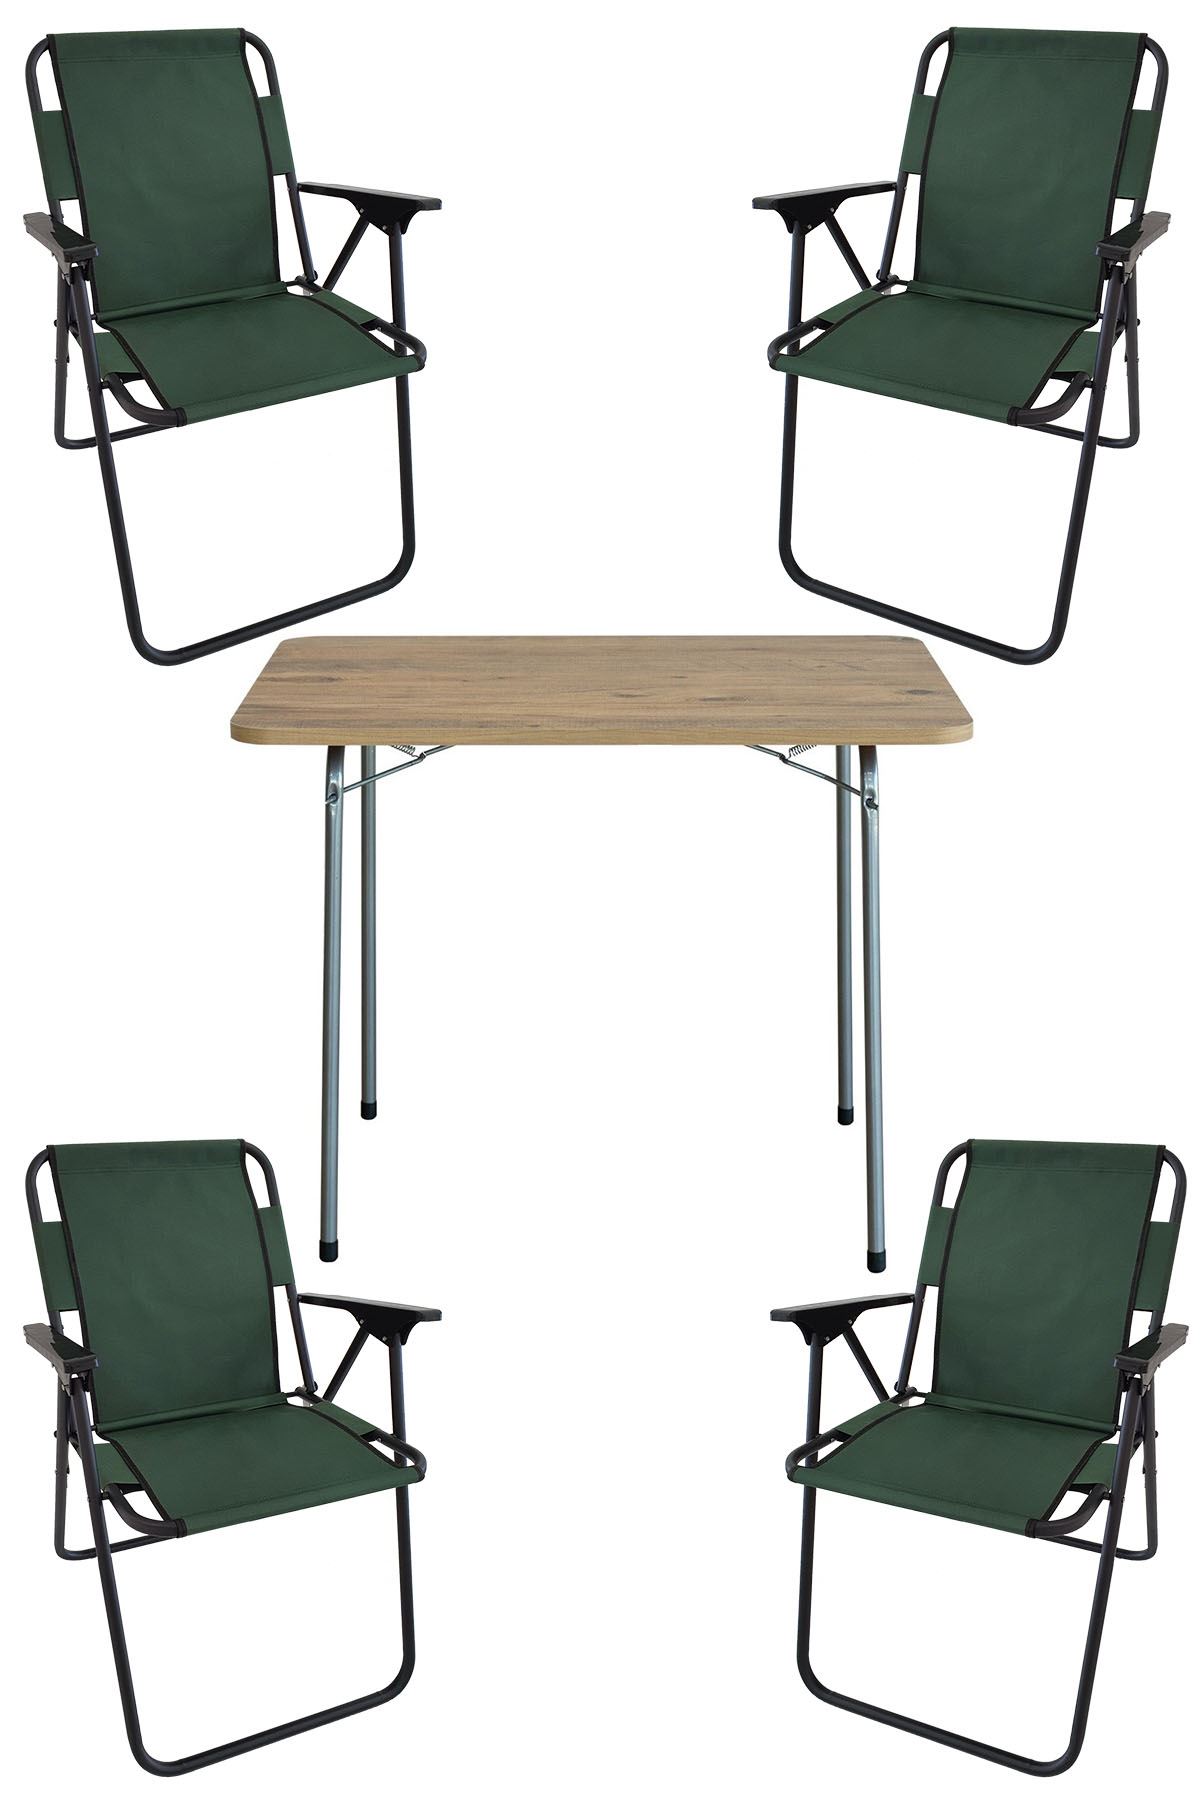 Bofigo 60X80 Pine Patterned Folding Table + 4 Pieces Folding Chair Camping Set Garden Set Green